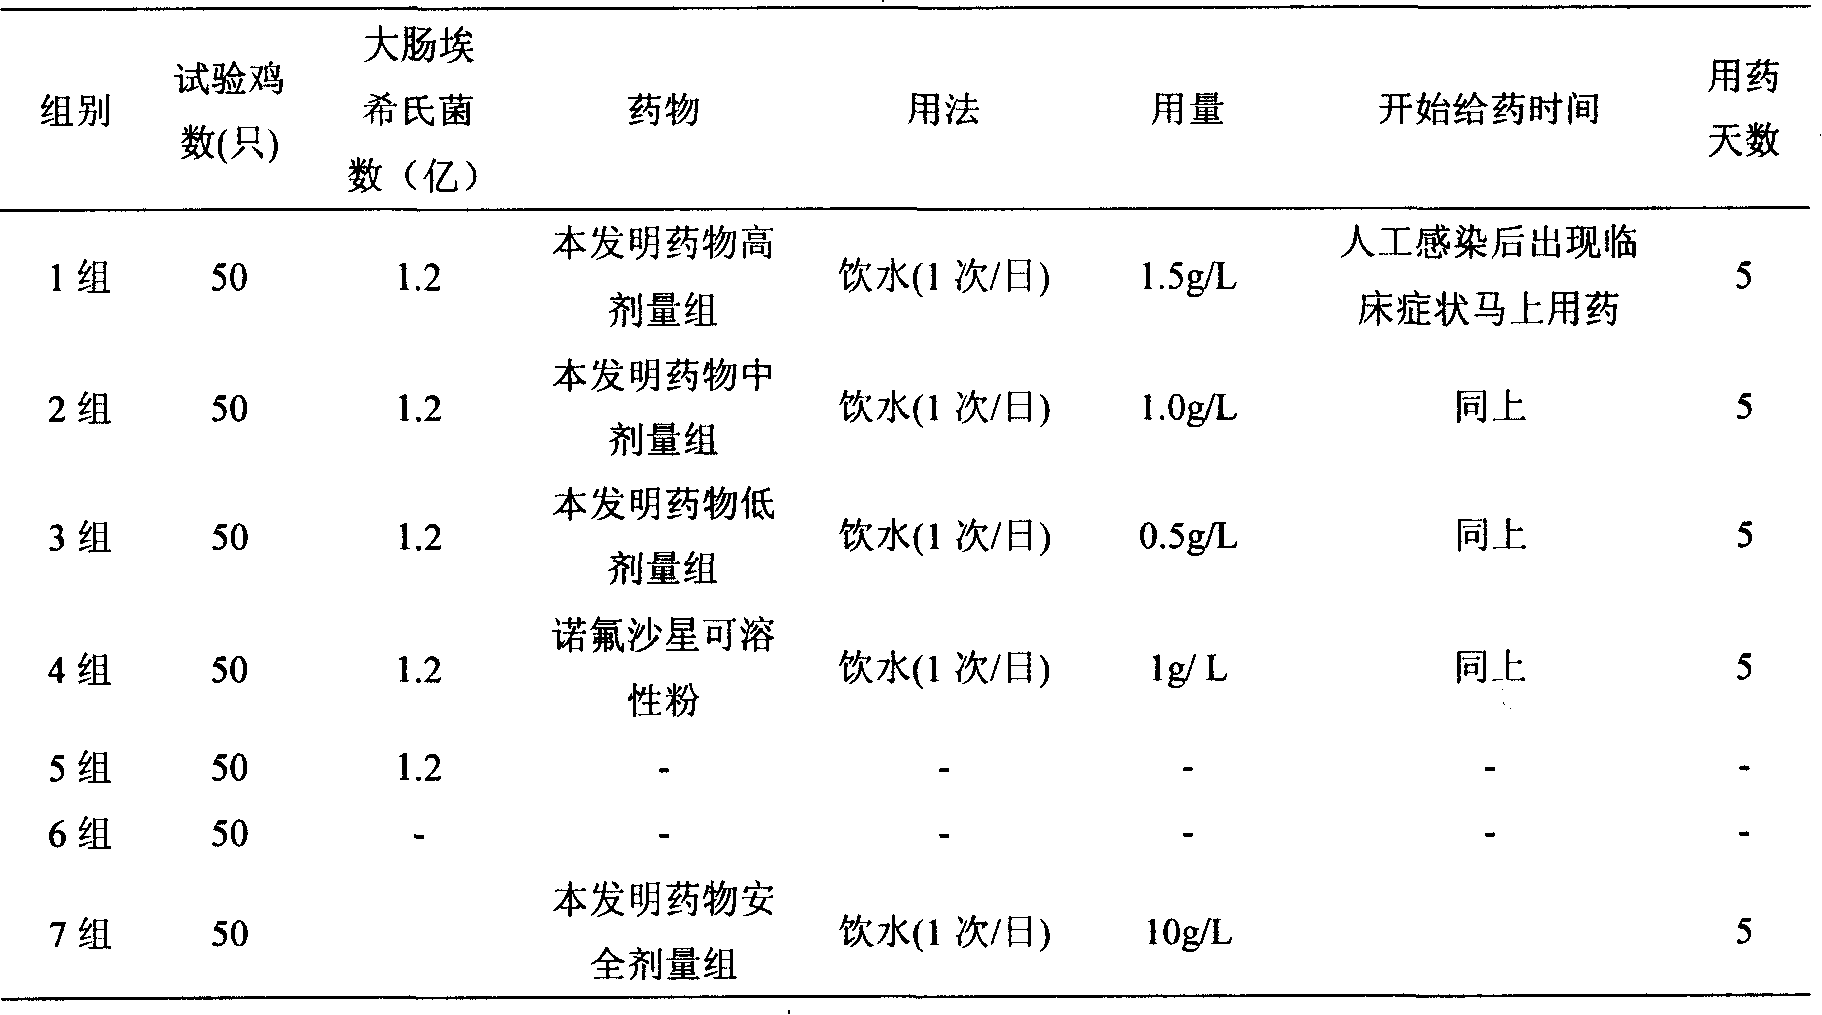 Chinese medicinal oral liquid for treating colibacillosis of avian